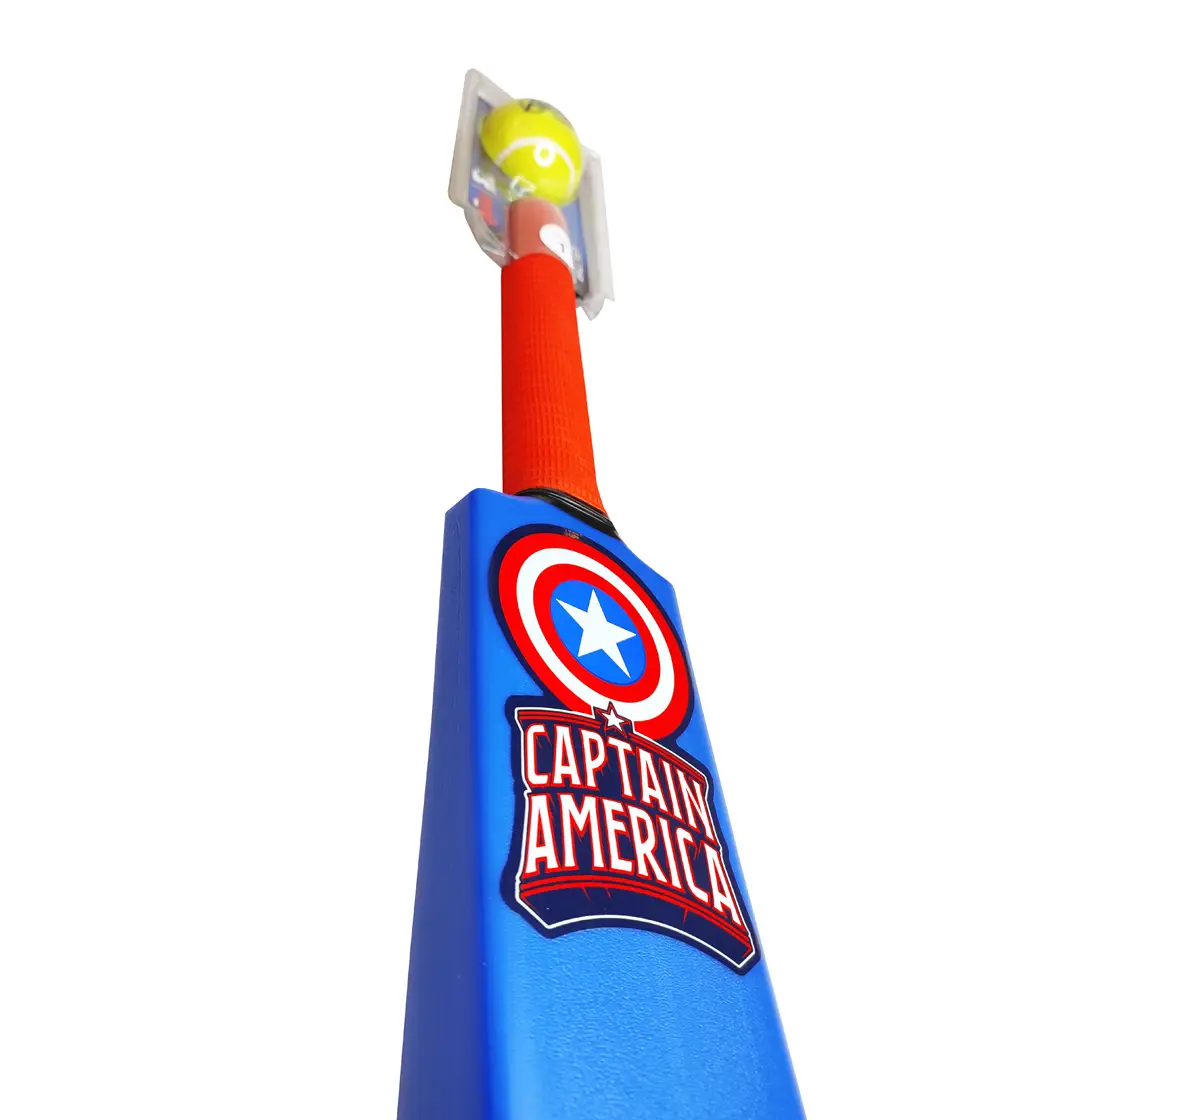 Starter Captain America Cricket Bat And Ball Size 4 Multicolour, 3Y+